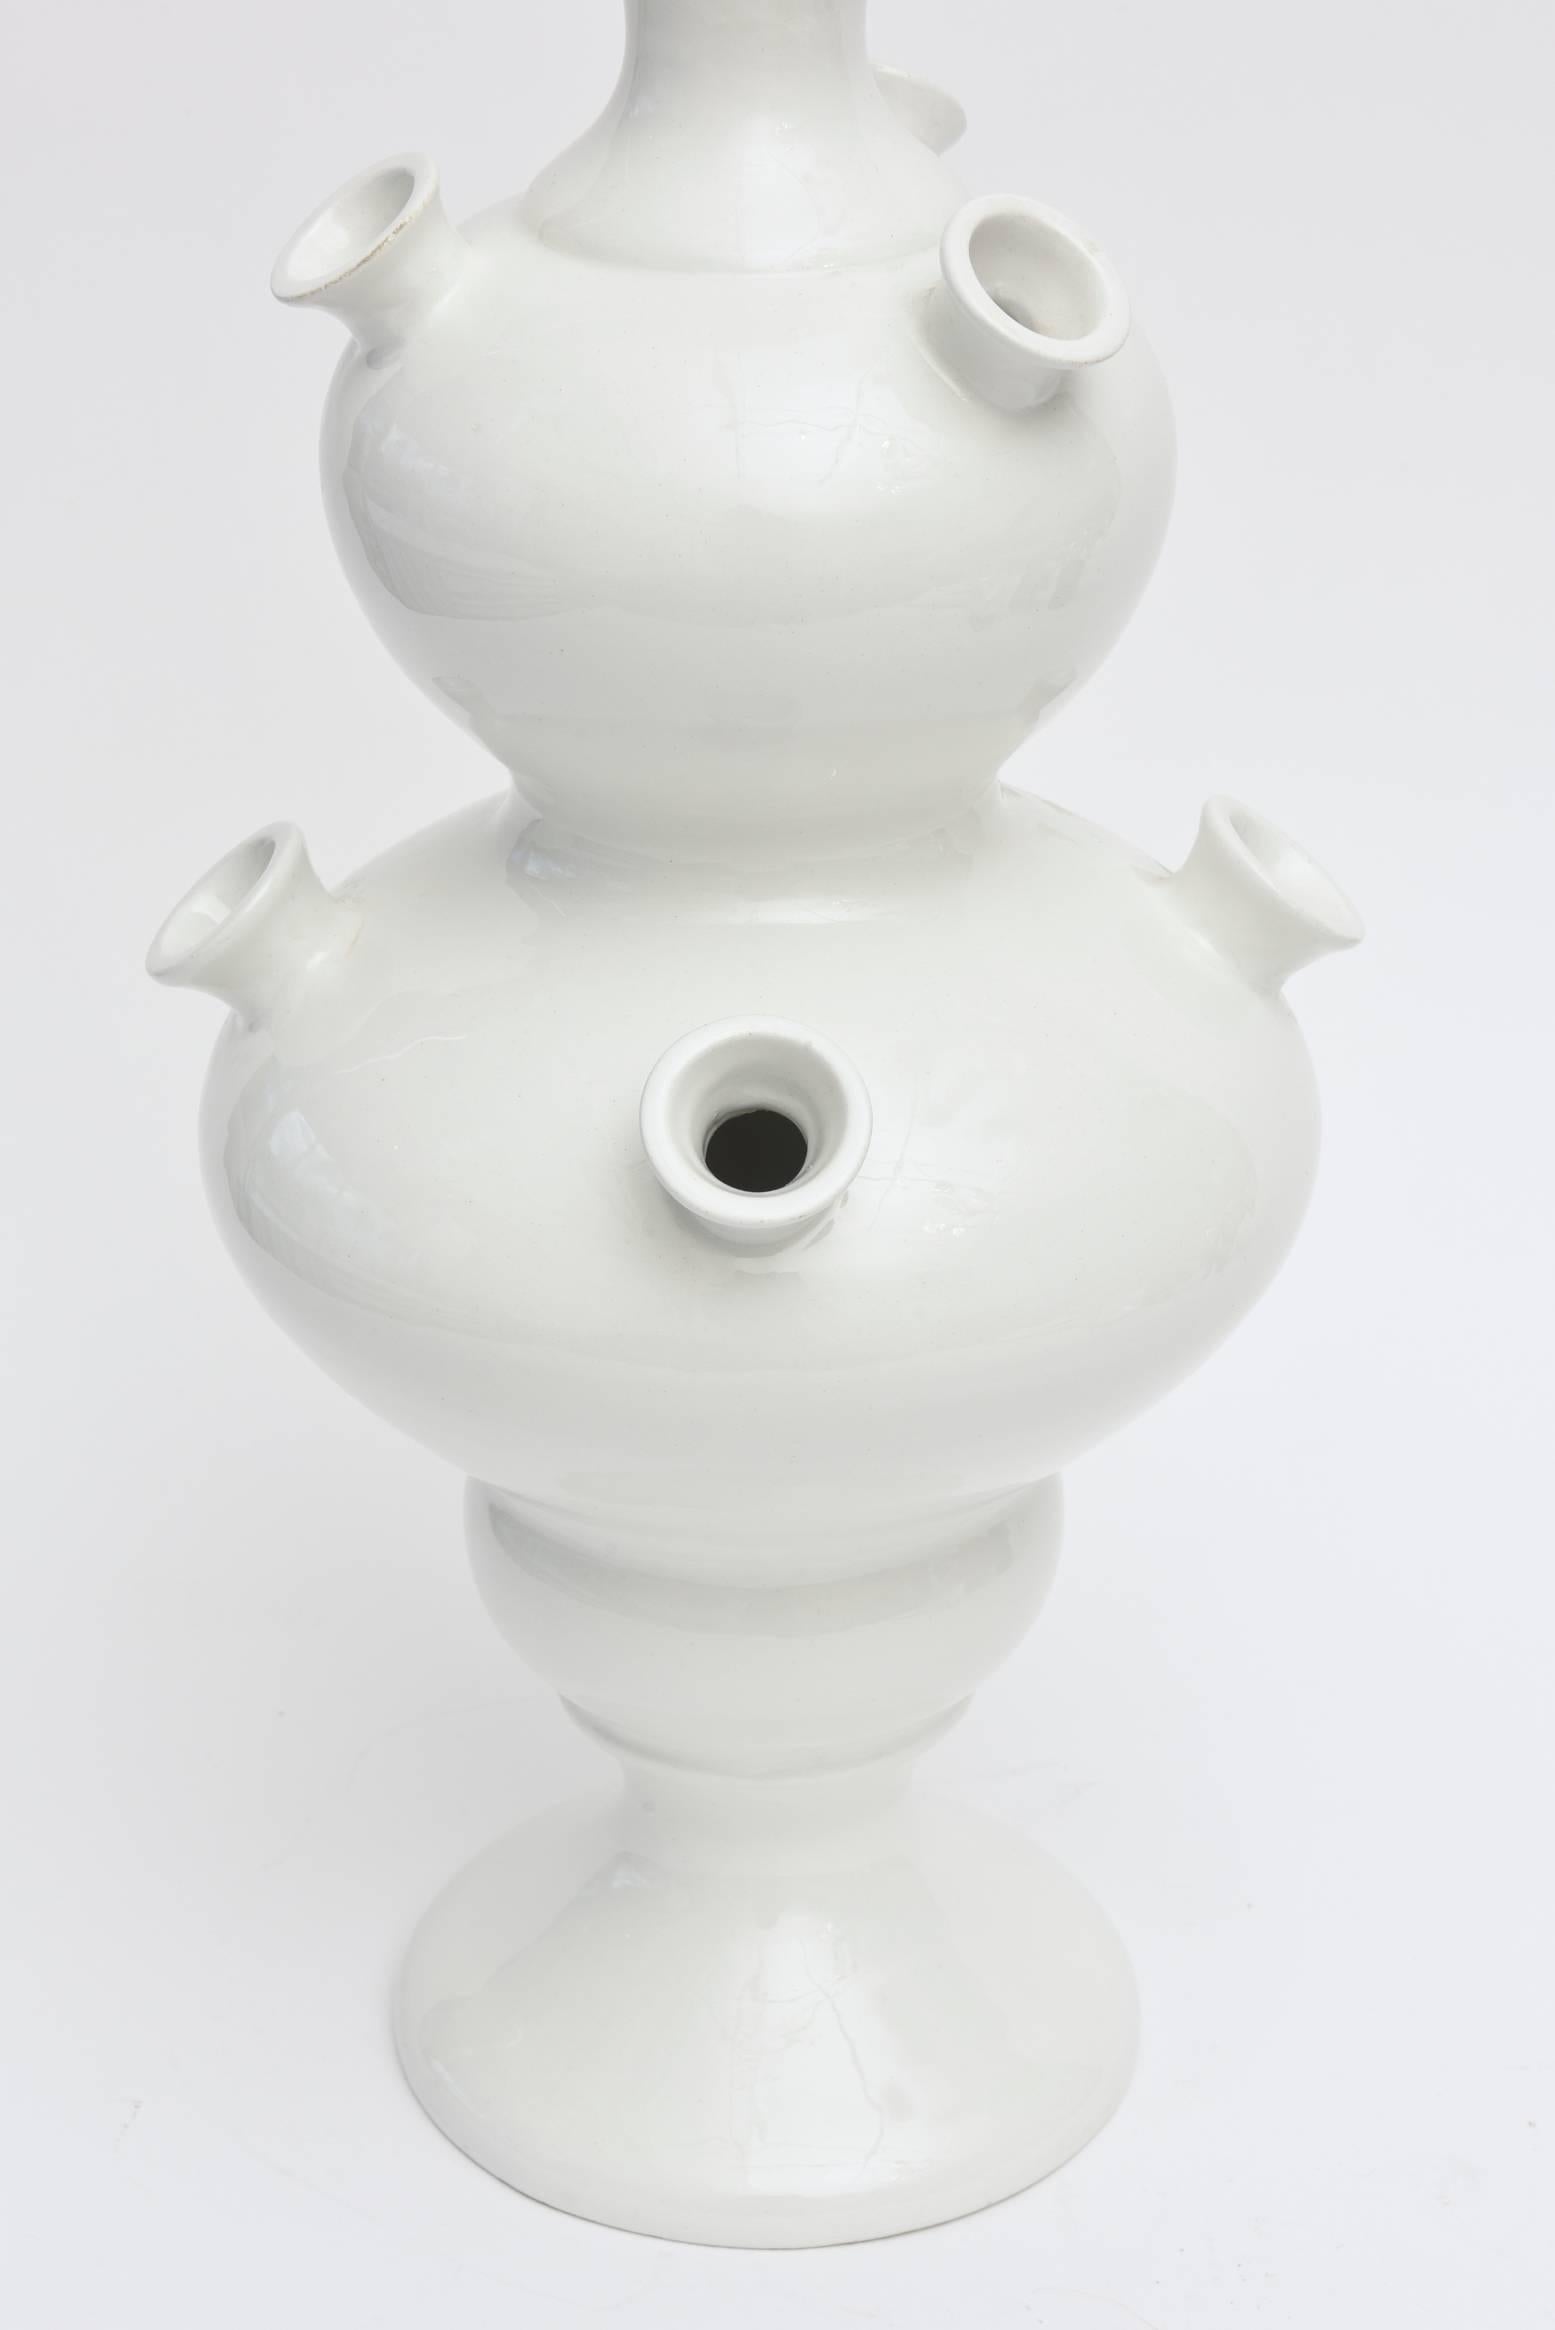 Late 20th Century Sculptural Sensual Italian Ceramic Vessel, Vase or Object